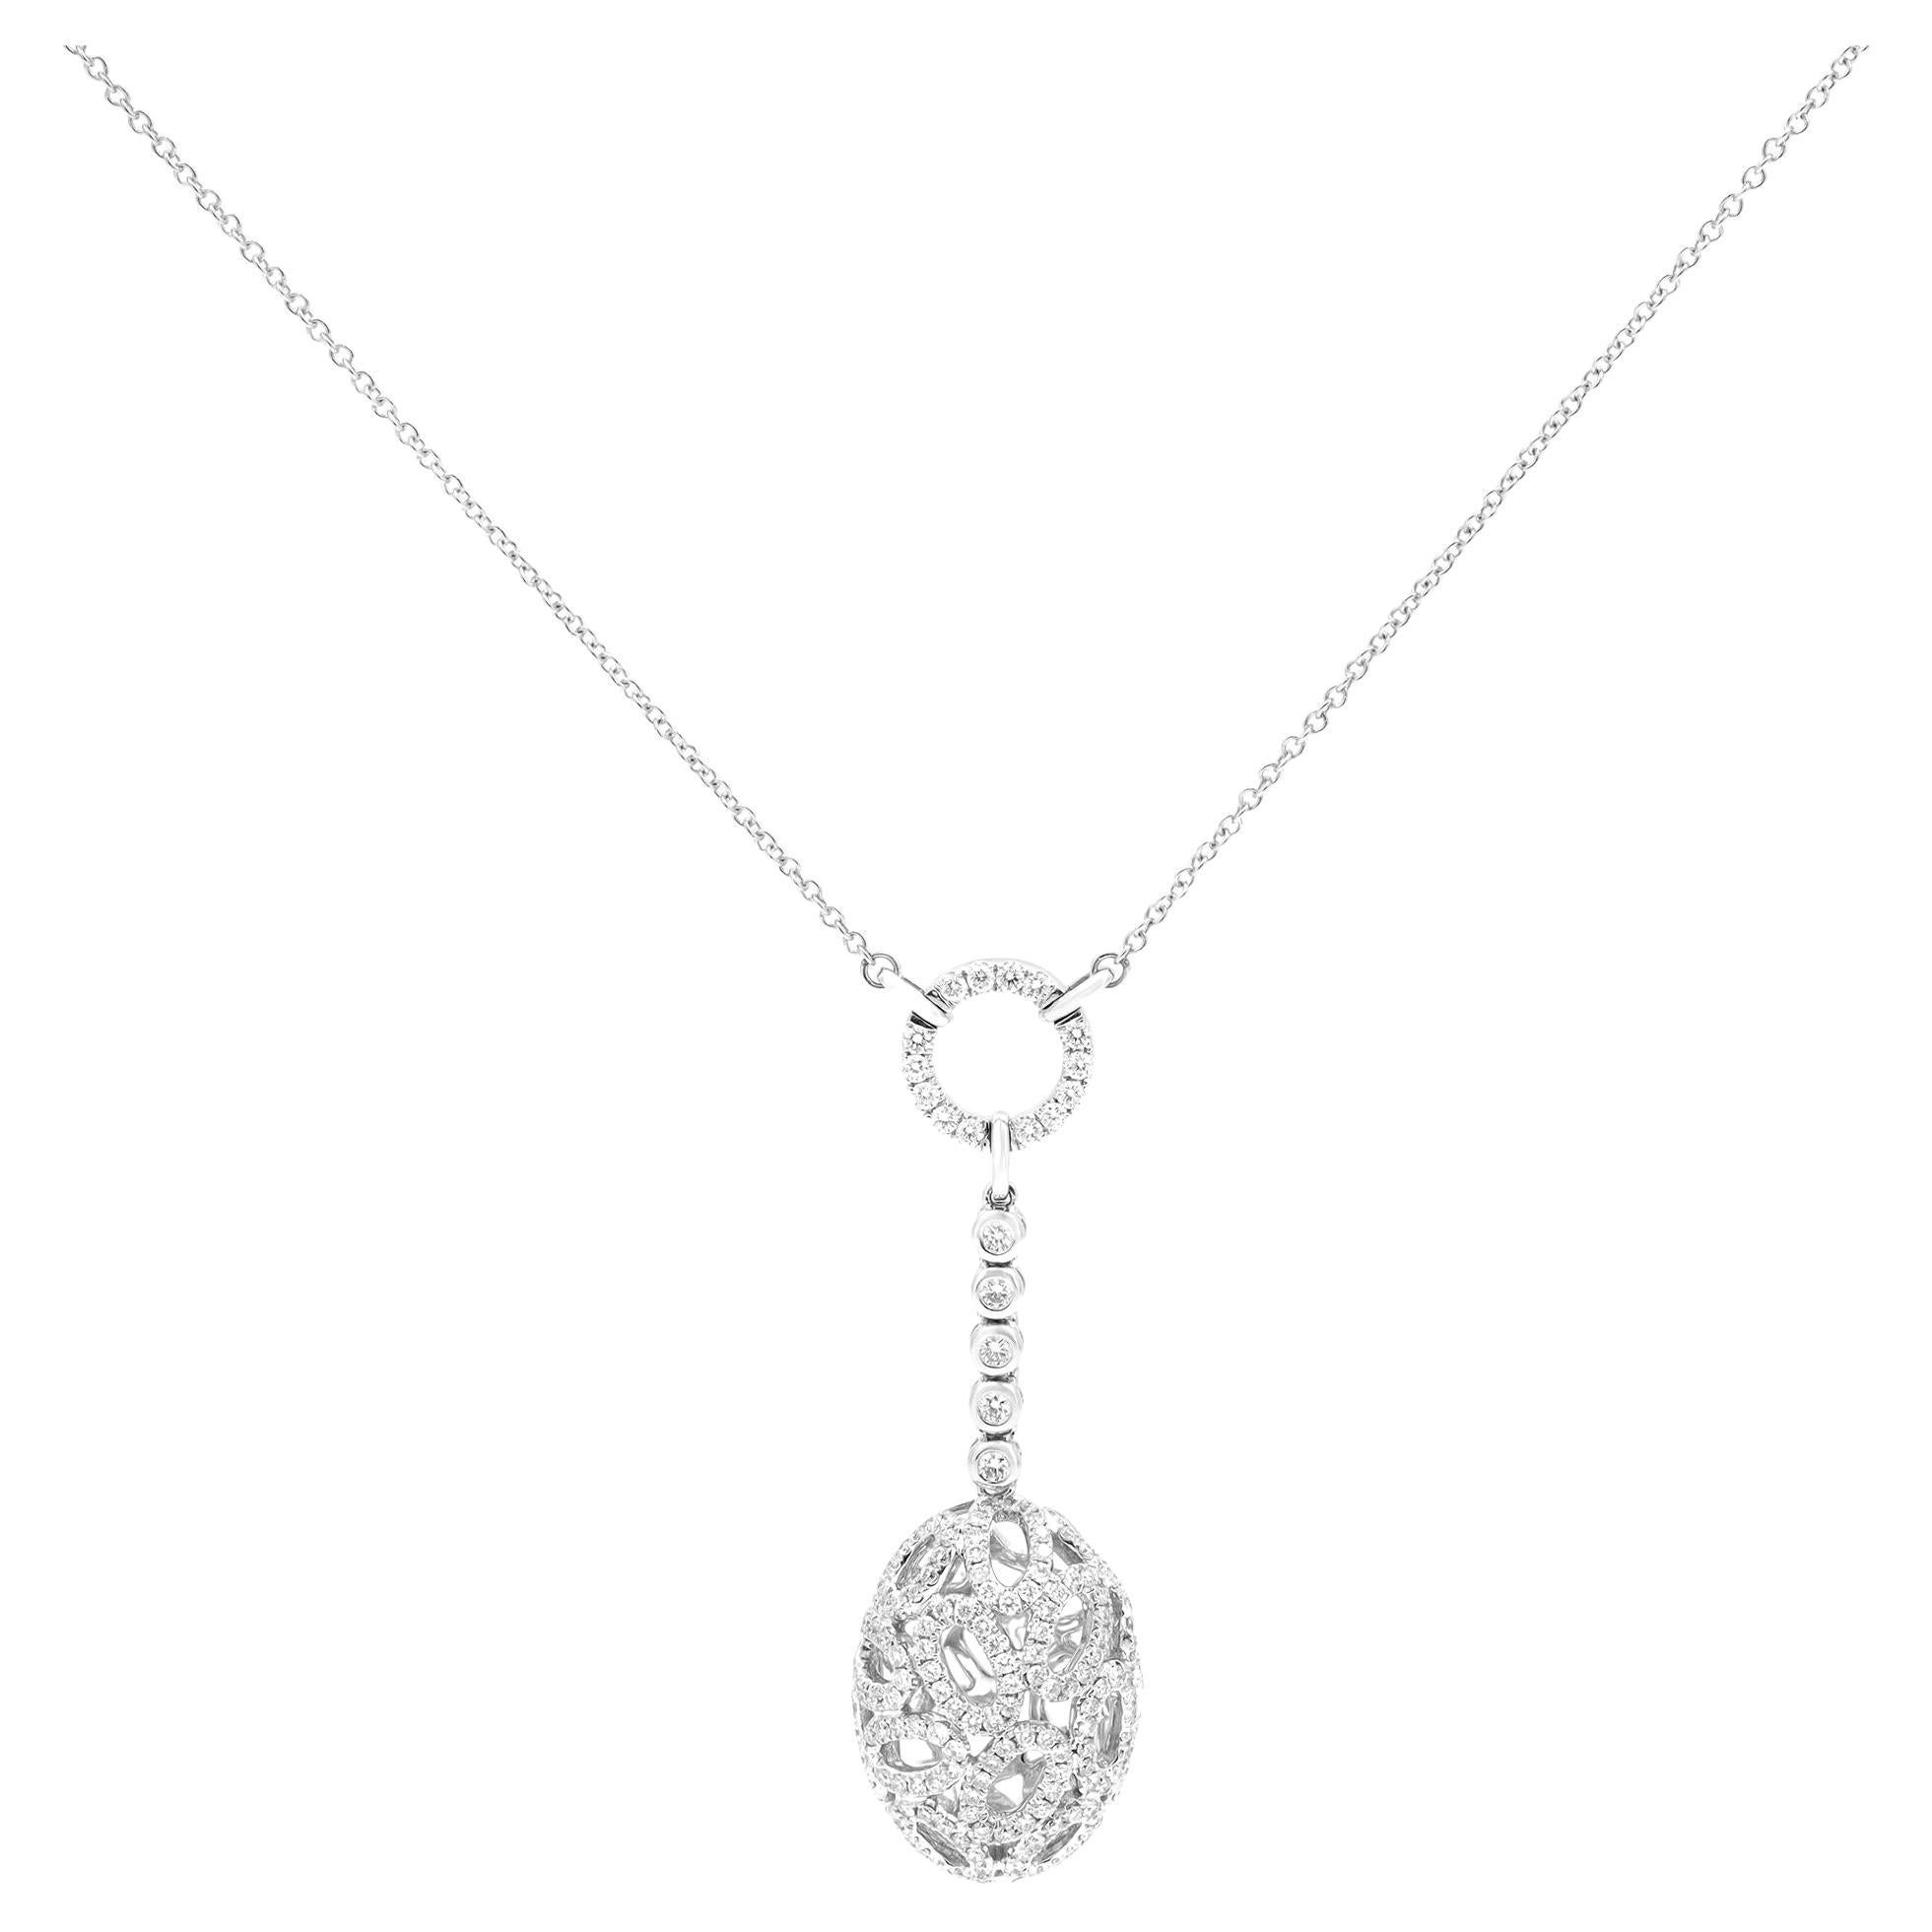 Piero Milano Natural Diamond Drop Pendant Necklace 18k White Gold 1.33cttw 